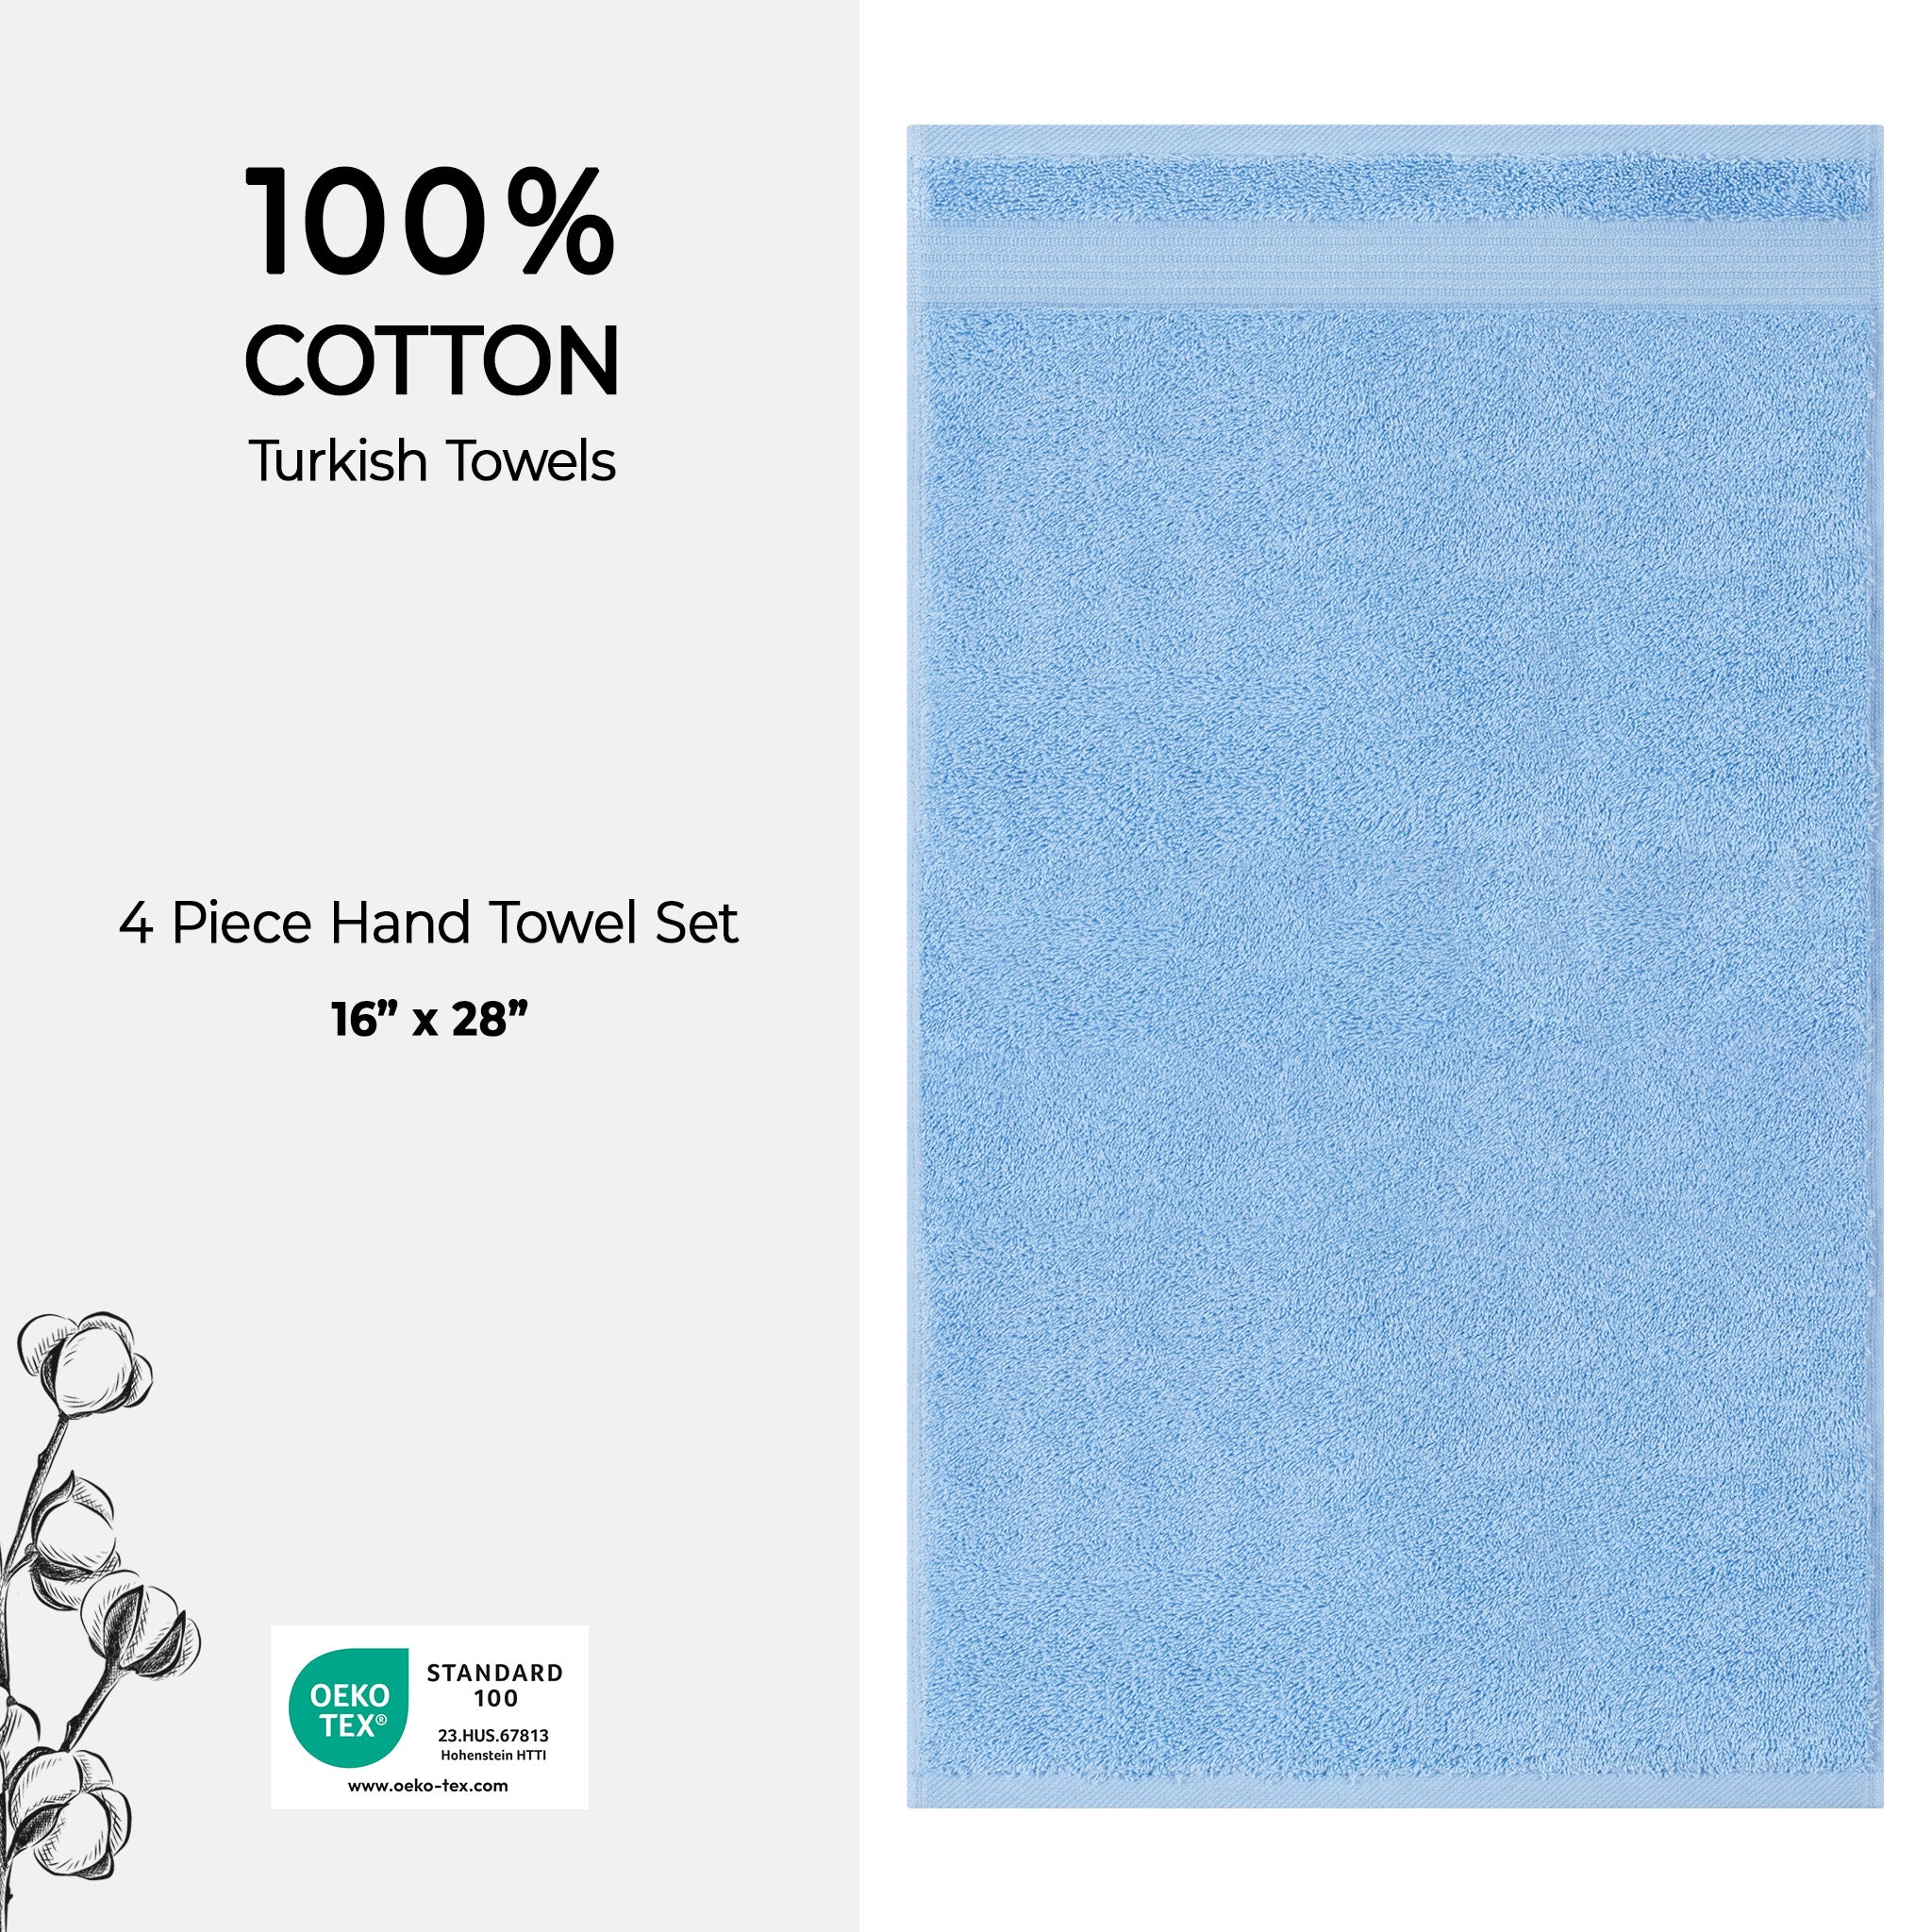 American Soft Linen Bekos 100% Cotton Turkish Towels, 4 Piece Hand Towel Set -sky-blue-04